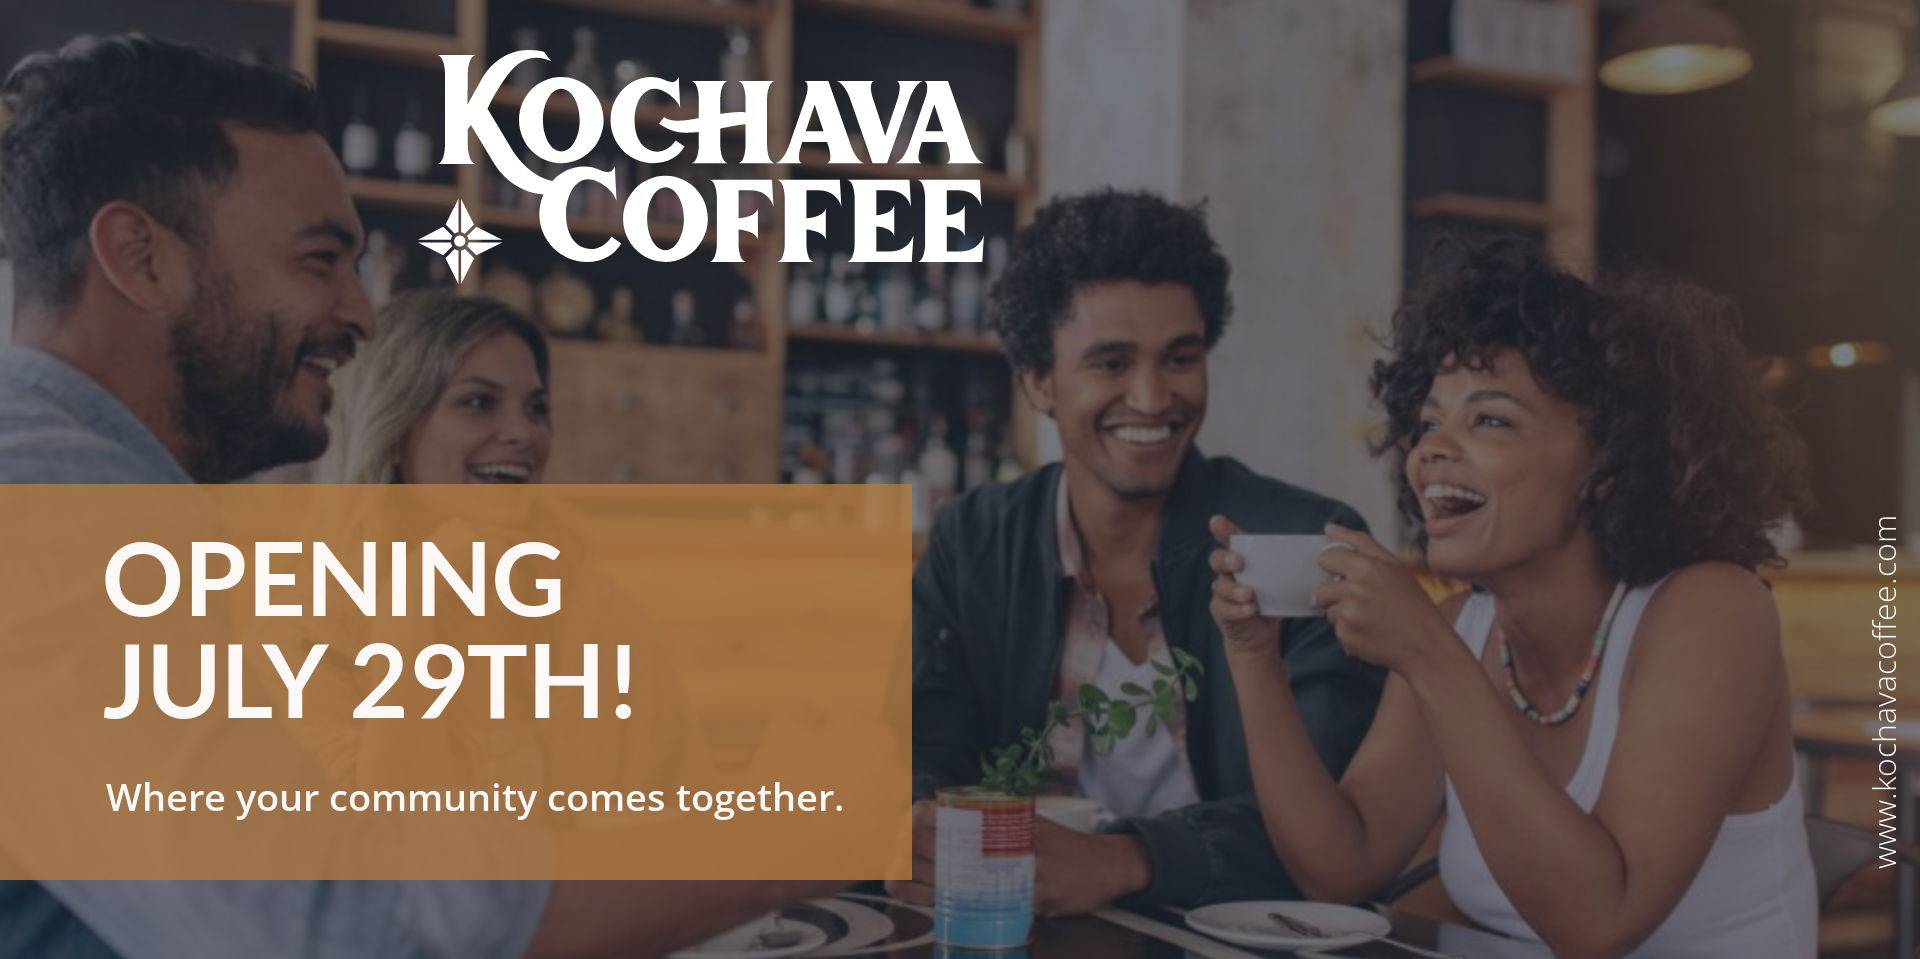 Kochava Coffee GRAND OPENING promotional image